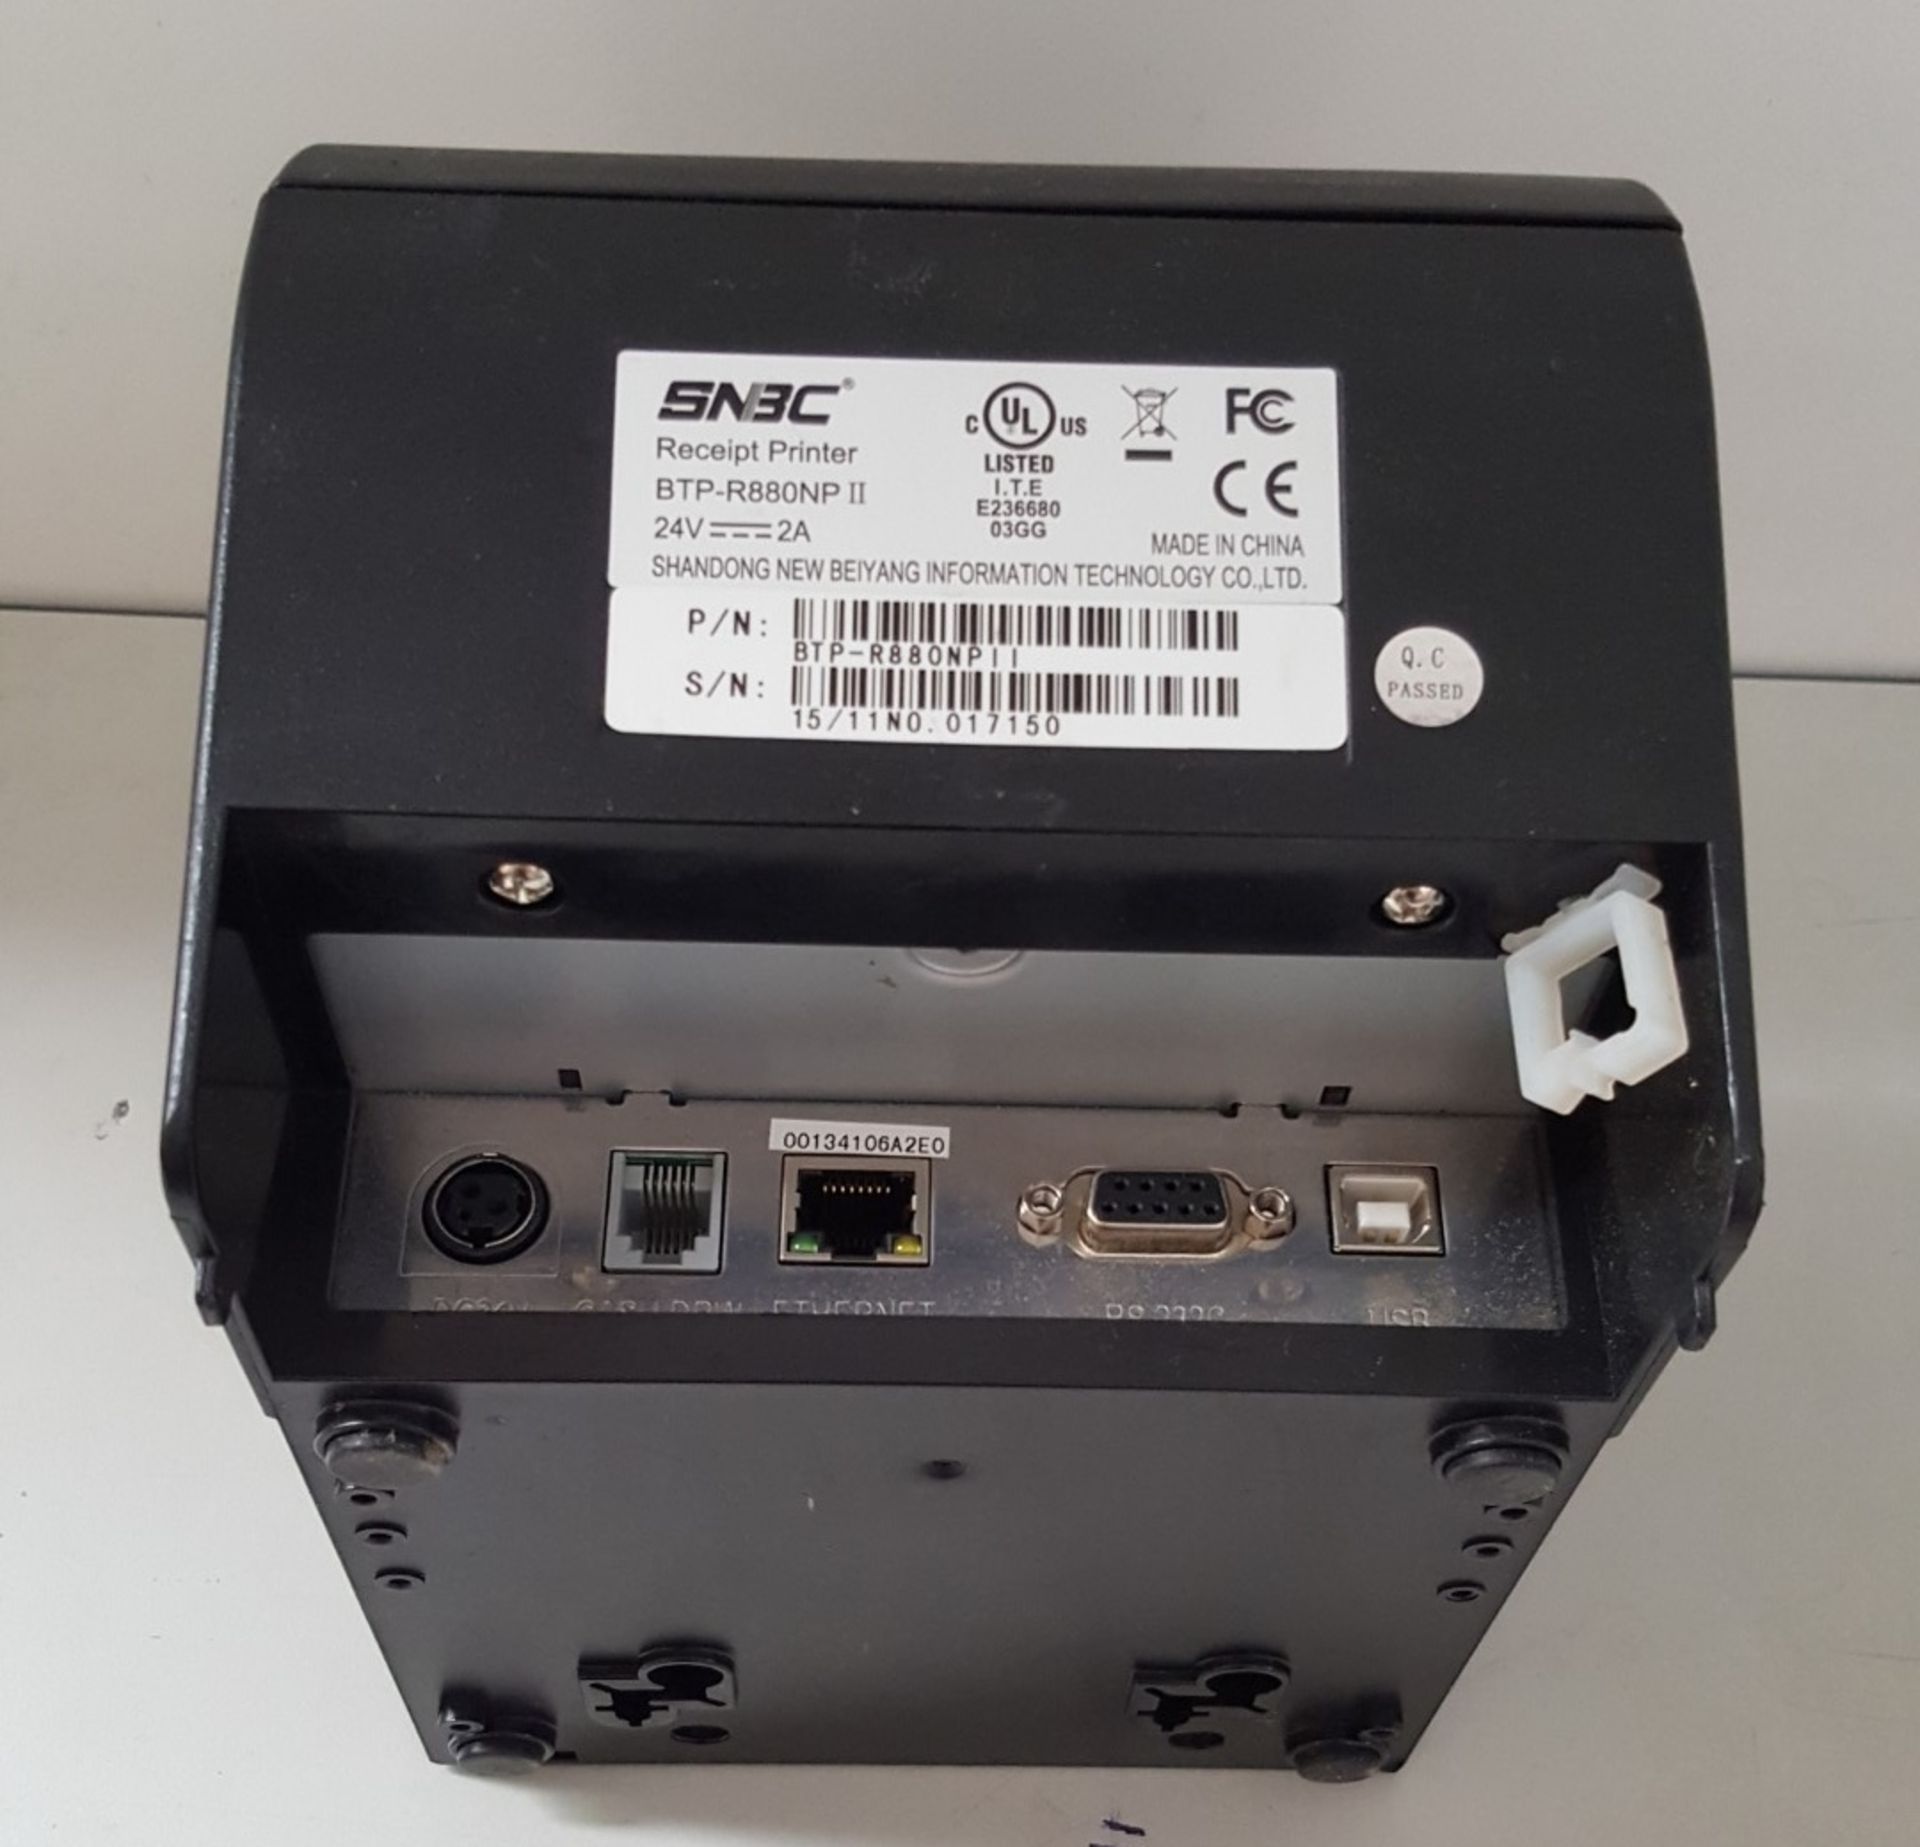 1 x SNBC BTP-R880NP USB Thermal Receipt Printer - Ref BY115 AC3 - Image 3 of 5